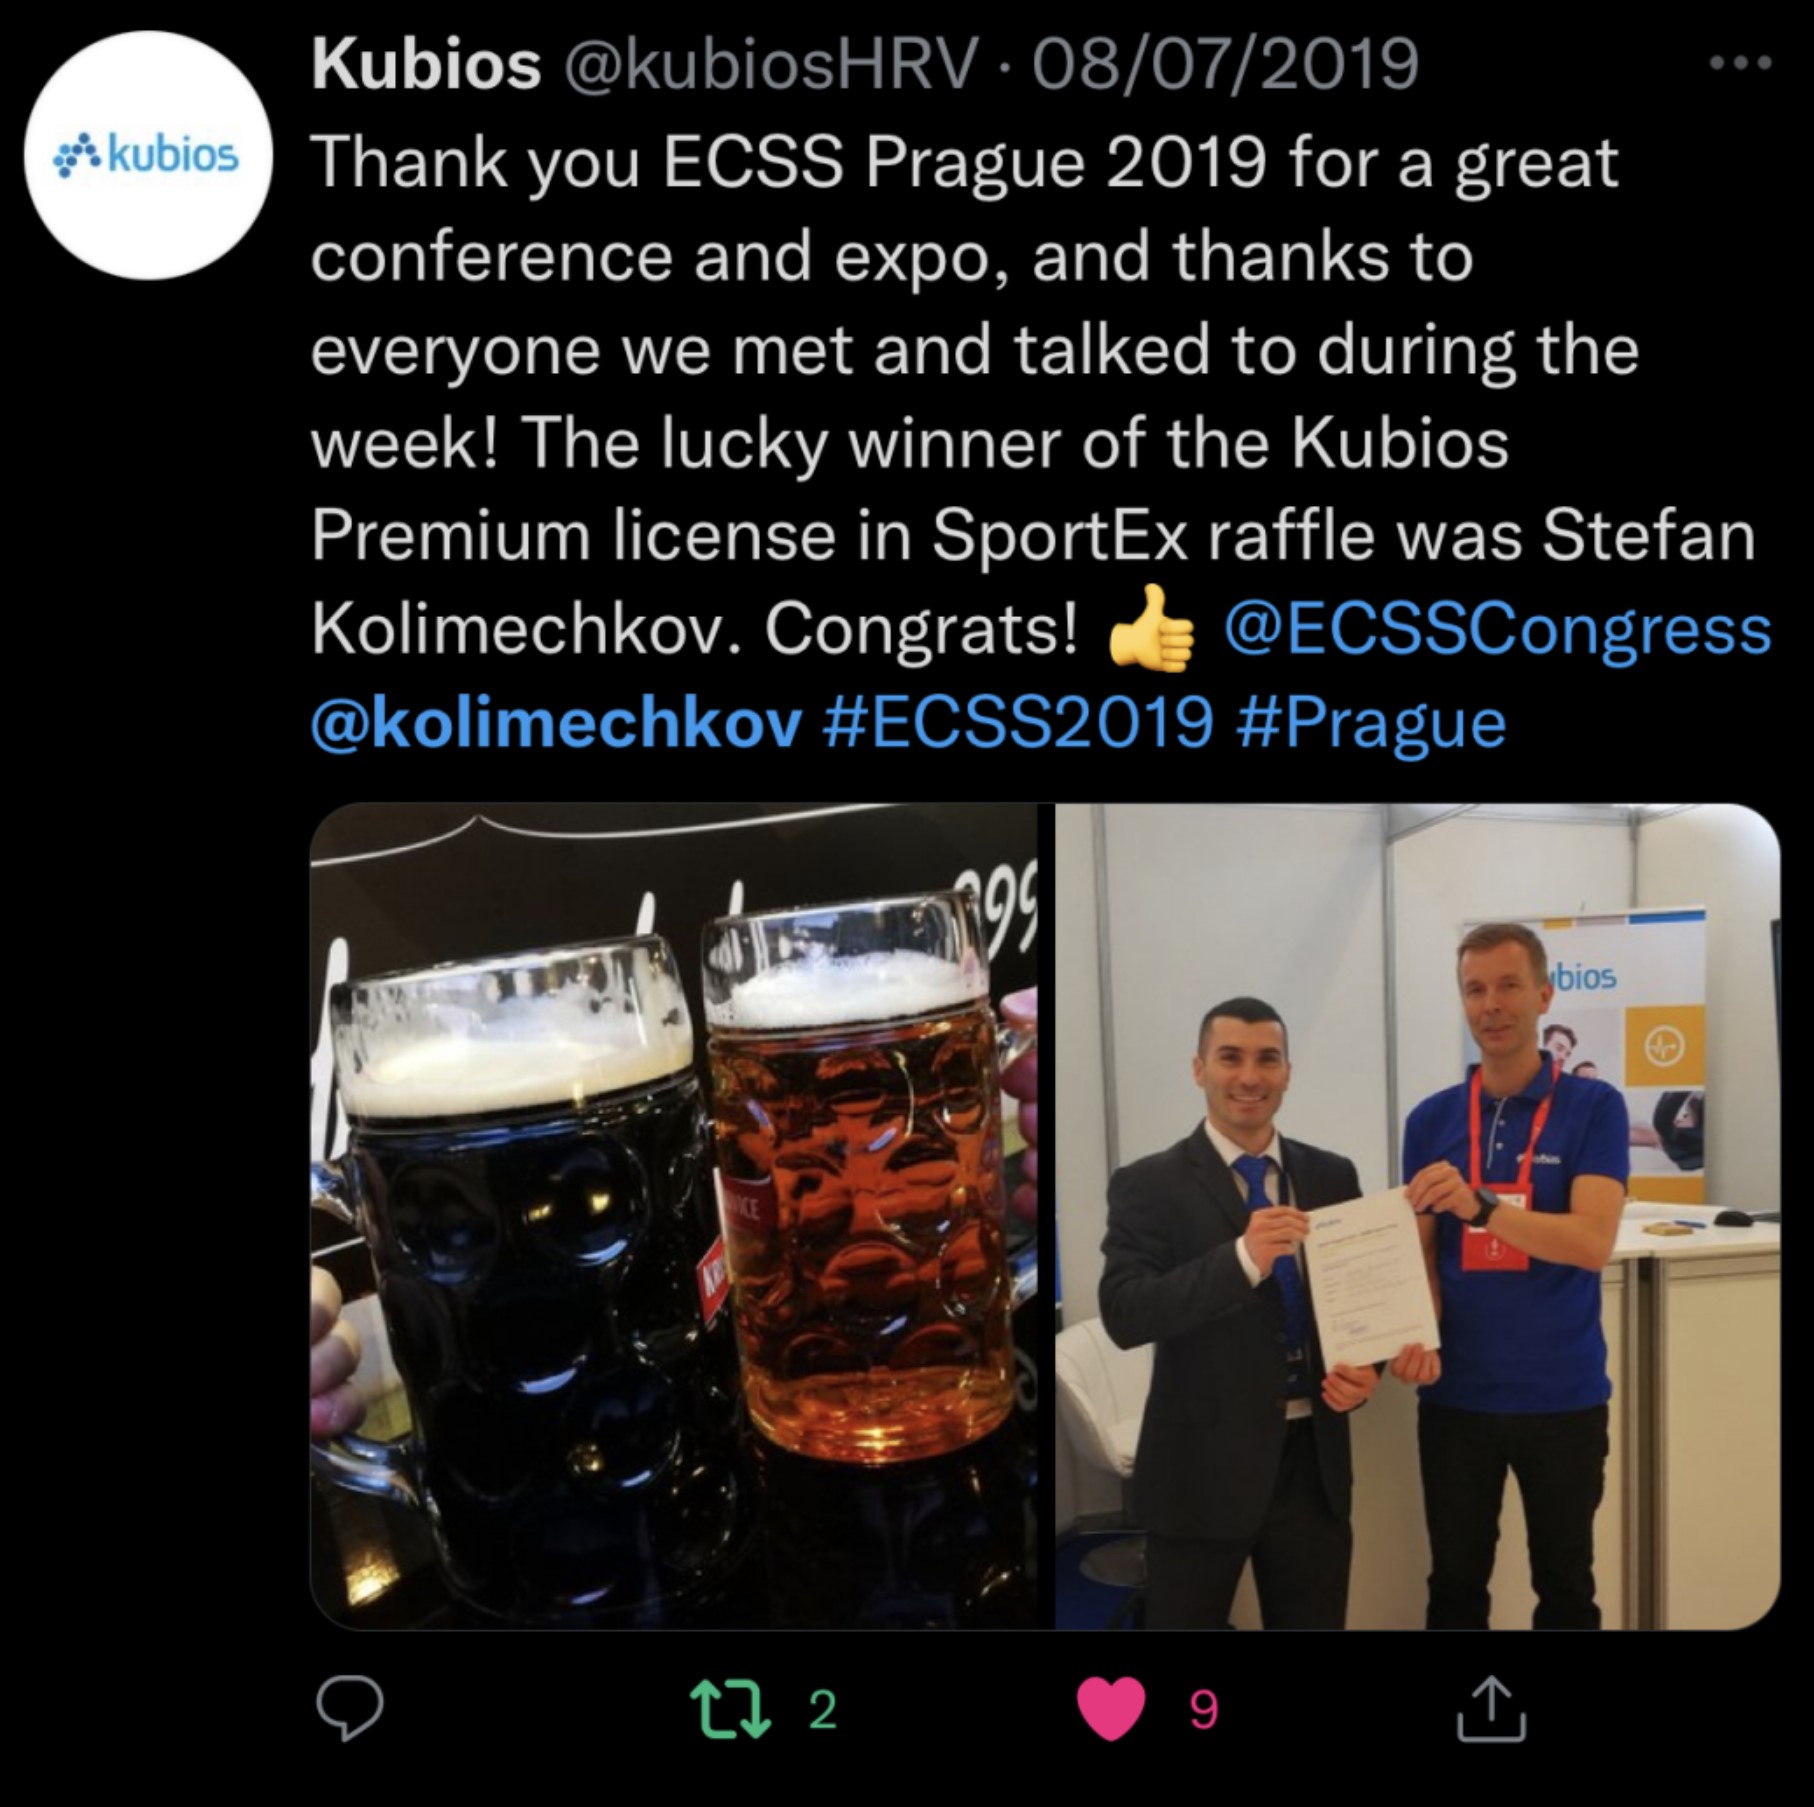 Dr Stefan Kolimechkov won the Kubios Software at the ECSS Prague 2019